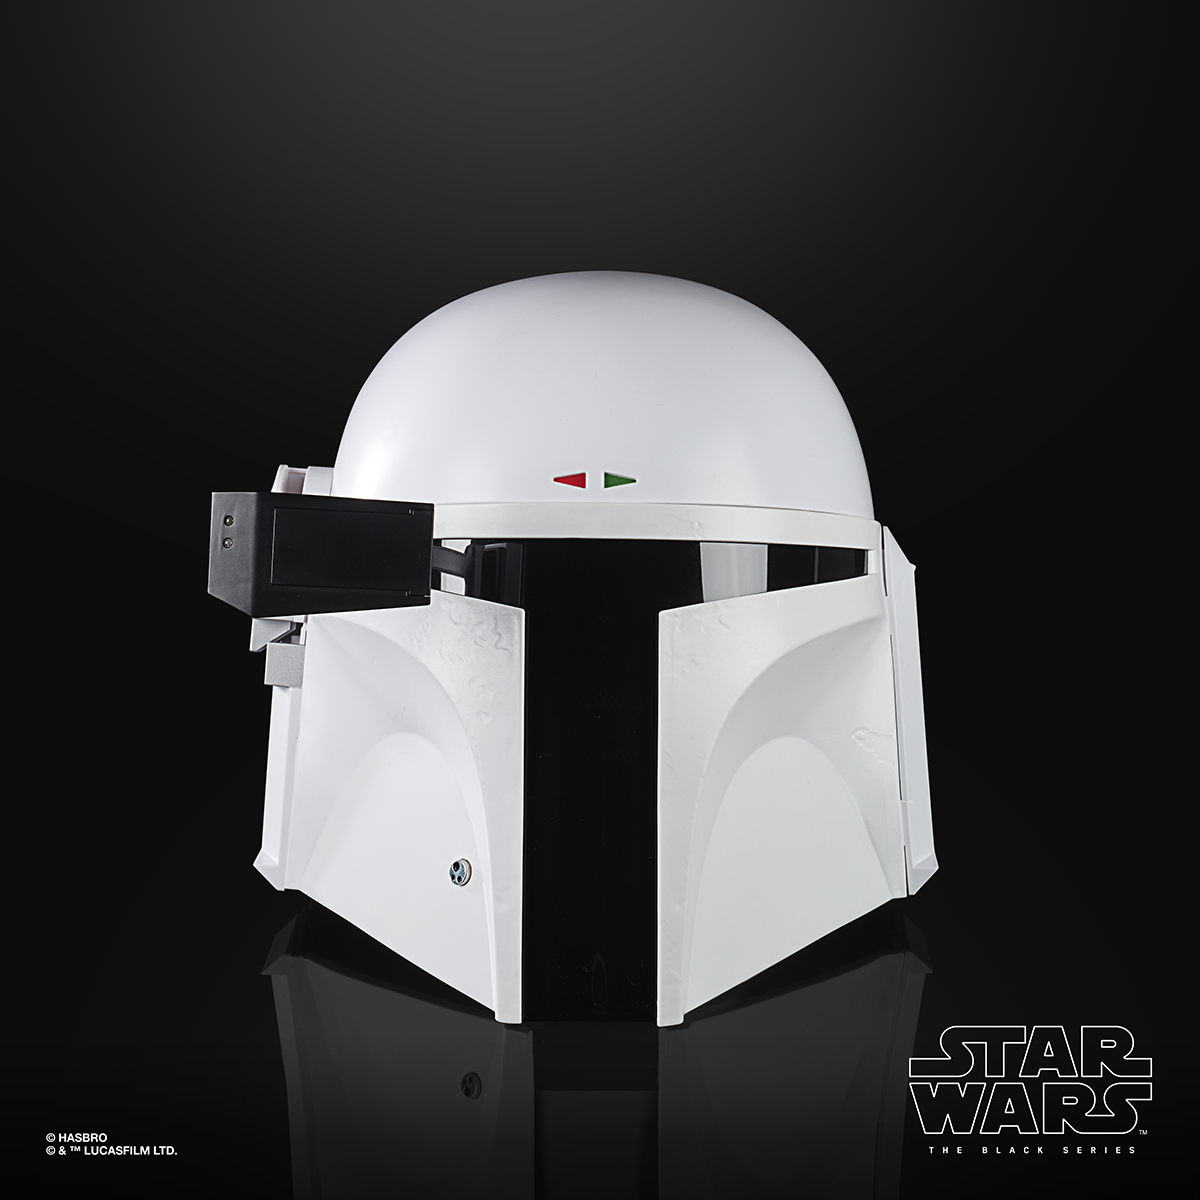 Star Wars The Black Series Boba Fett Prototype Armor Electronic Helmet Oop 2